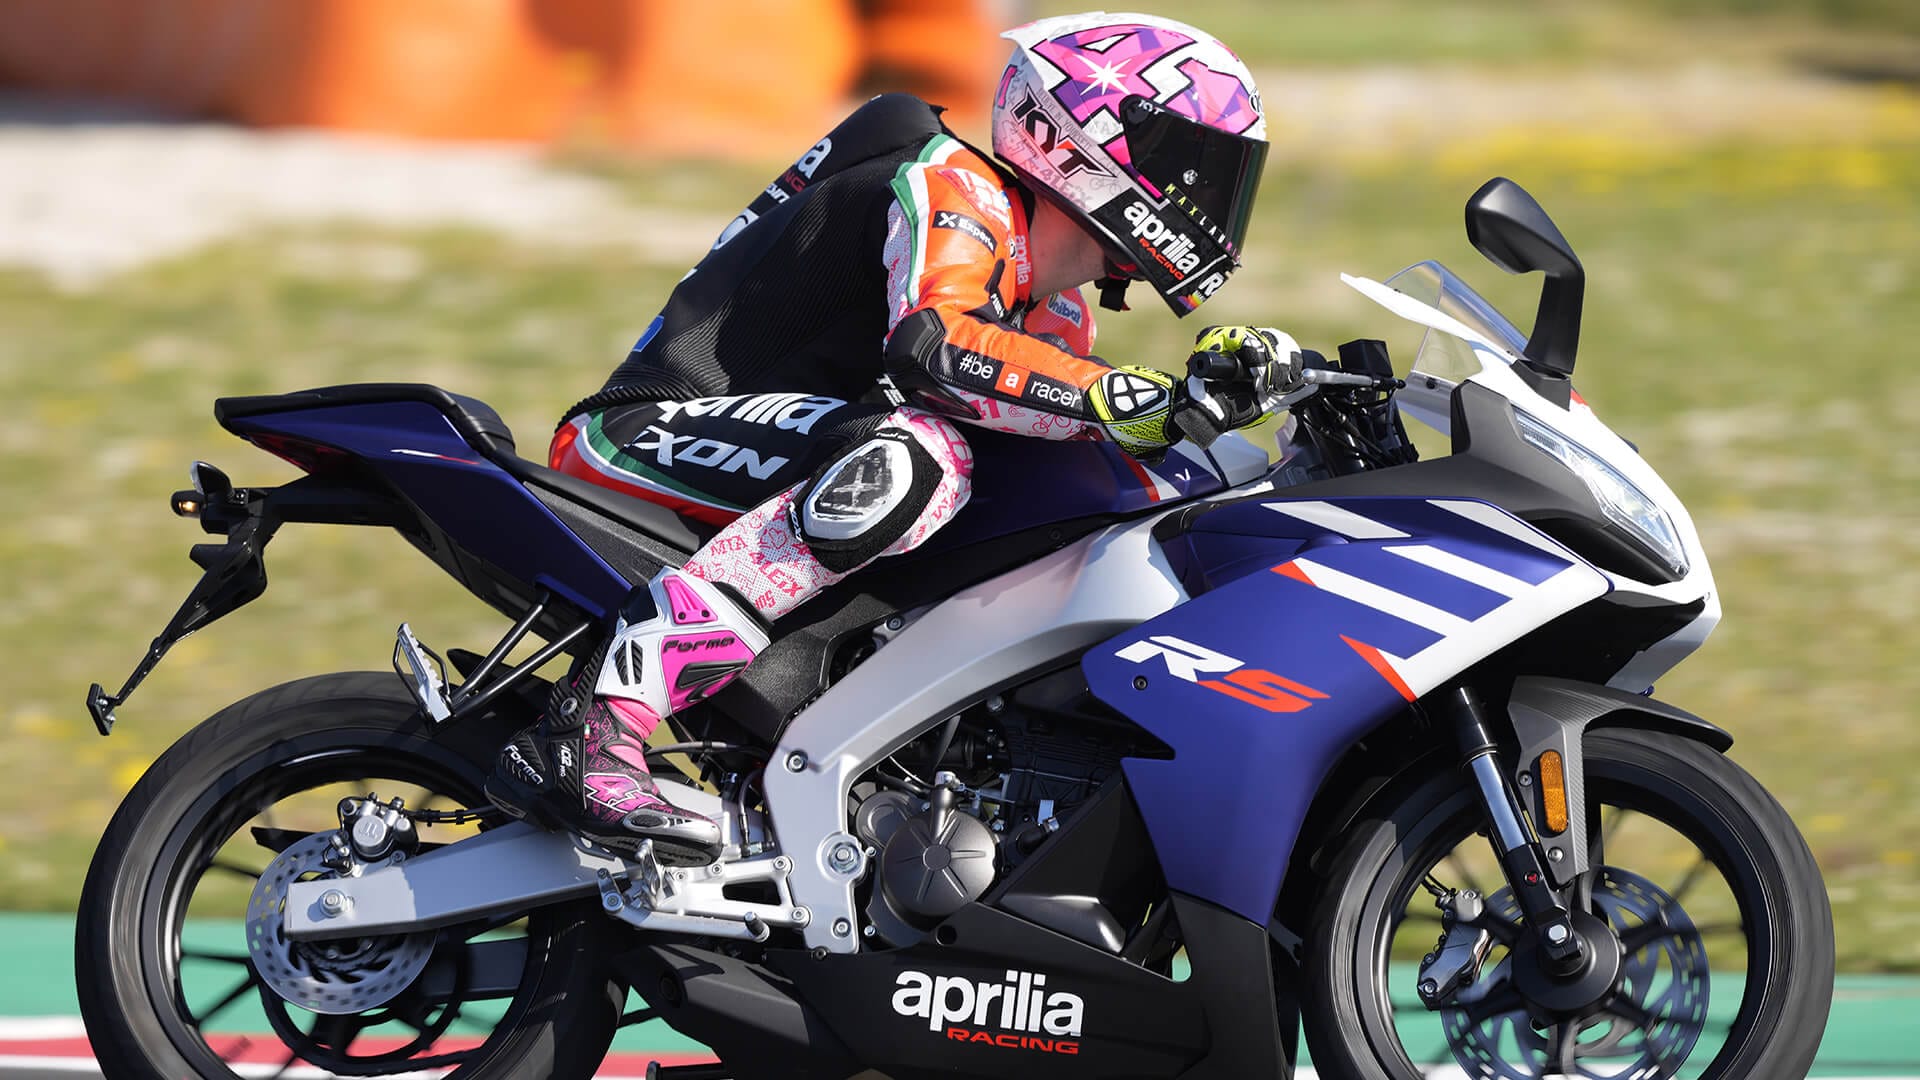 Aprilia RS: born from racing. 125cc